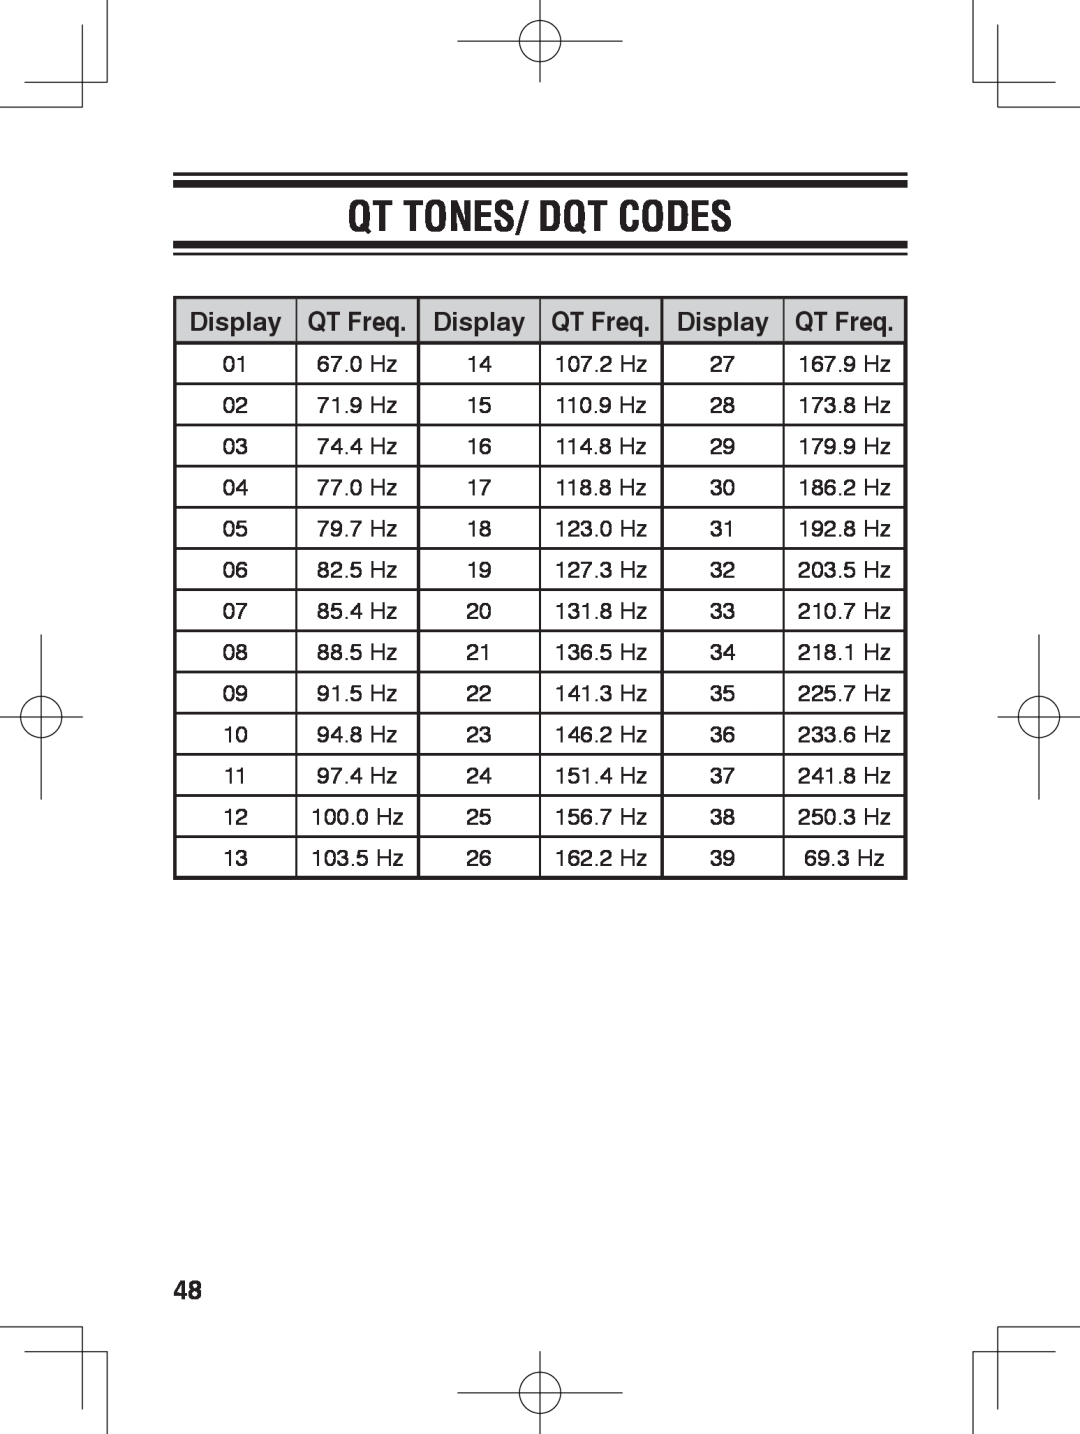 Kenwood TK-3230 instruction manual QT tones/ DQT codes, Display, QT Freq 